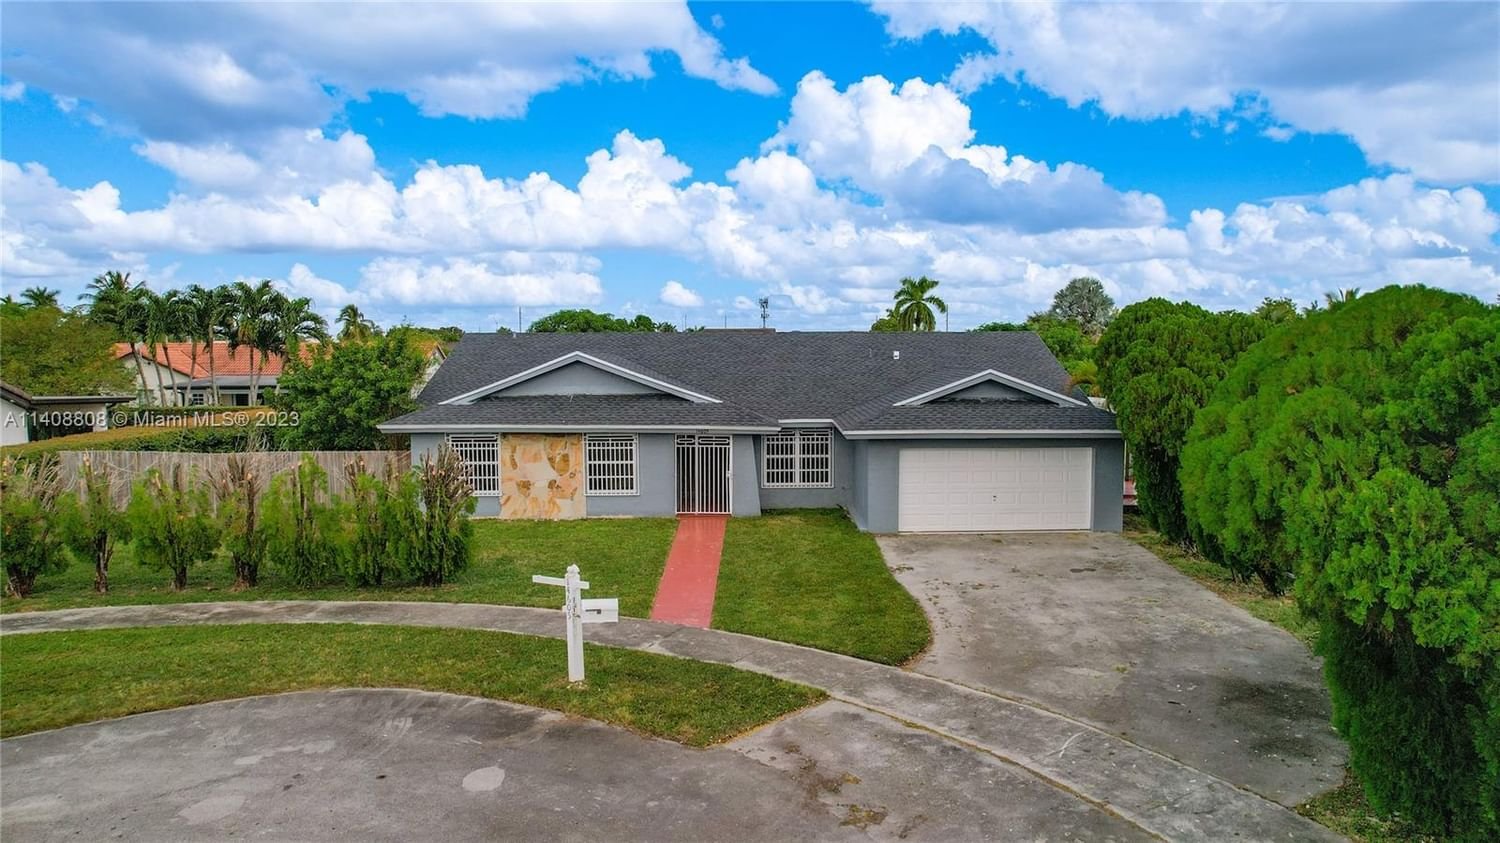 Real estate property located at 14605 44th Ter, Miami-Dade County, Miami, FL